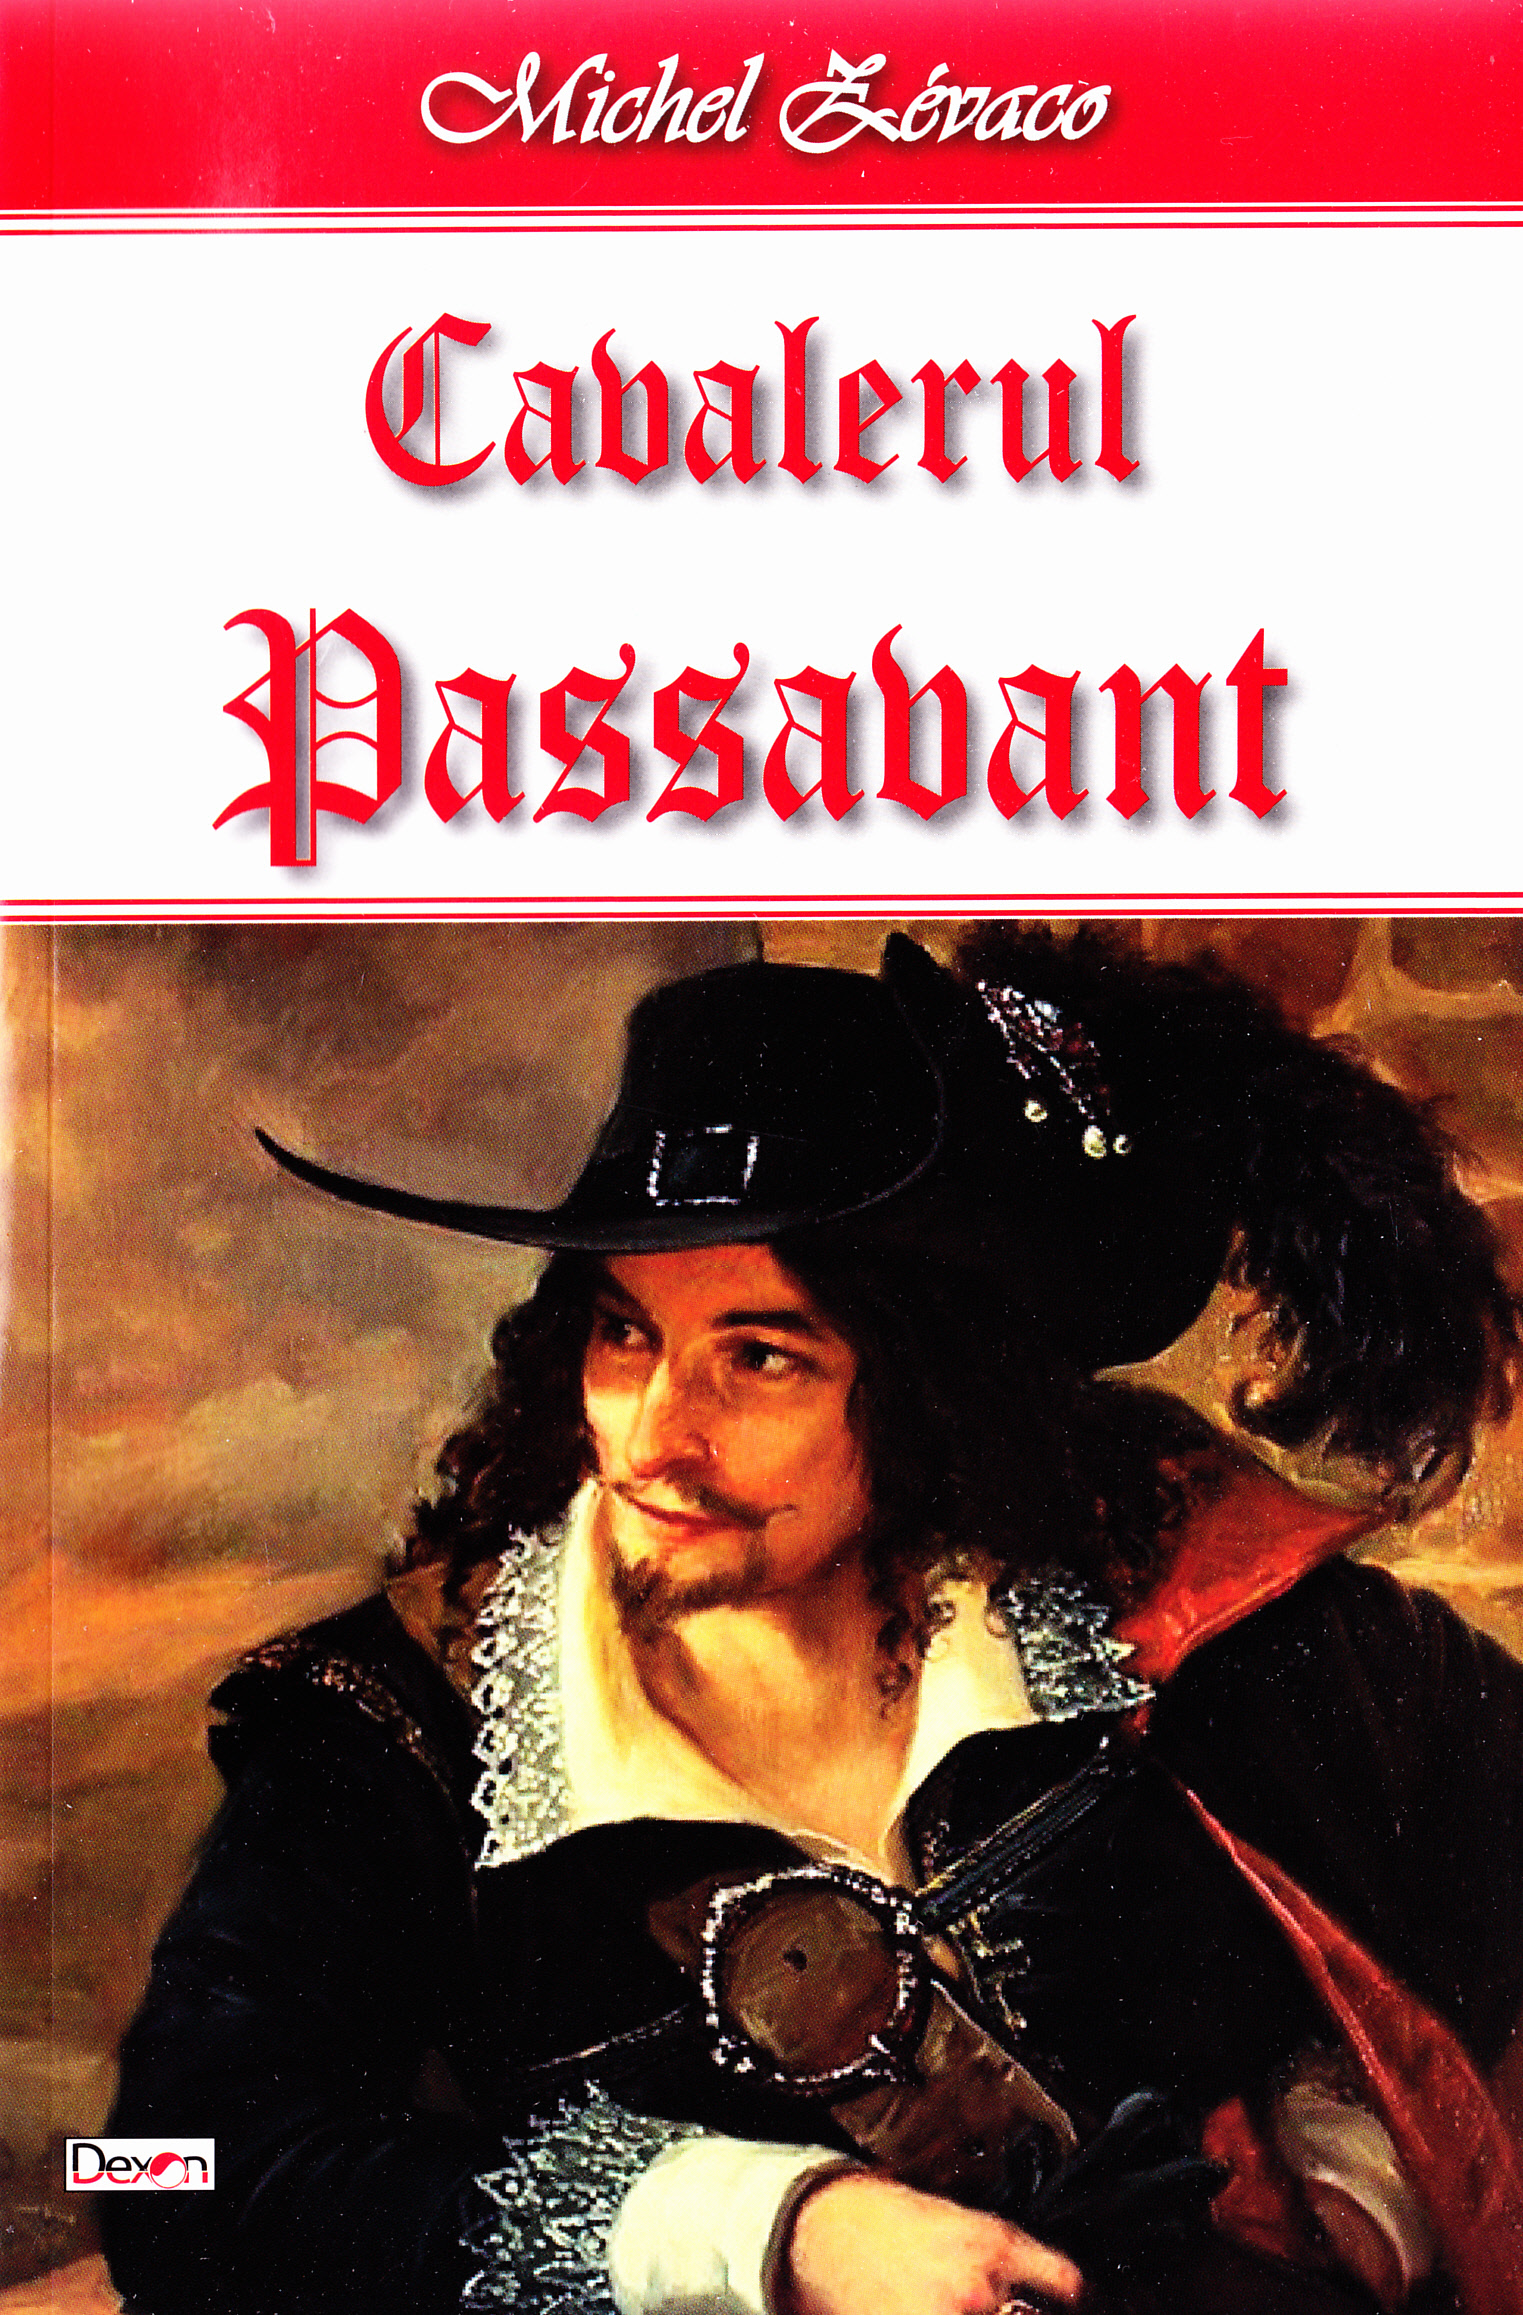 Cavalerul Passavant - Michel Zevaco